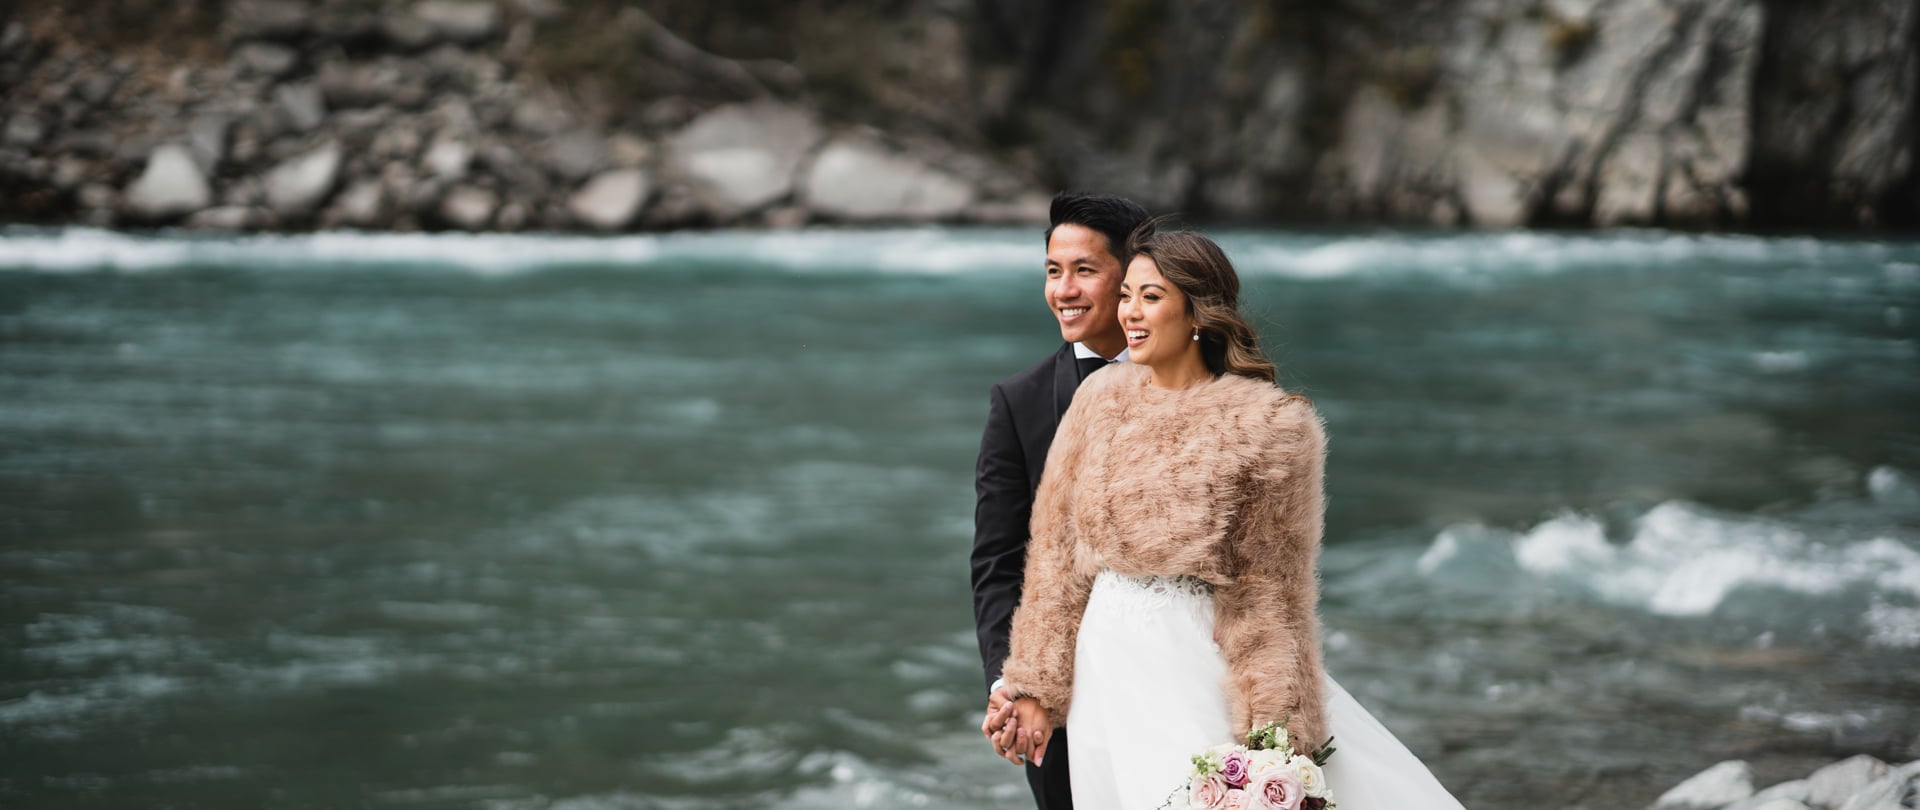 Cristine & Jeremy Wedding Video Filmed atQueenstown,New Zealand